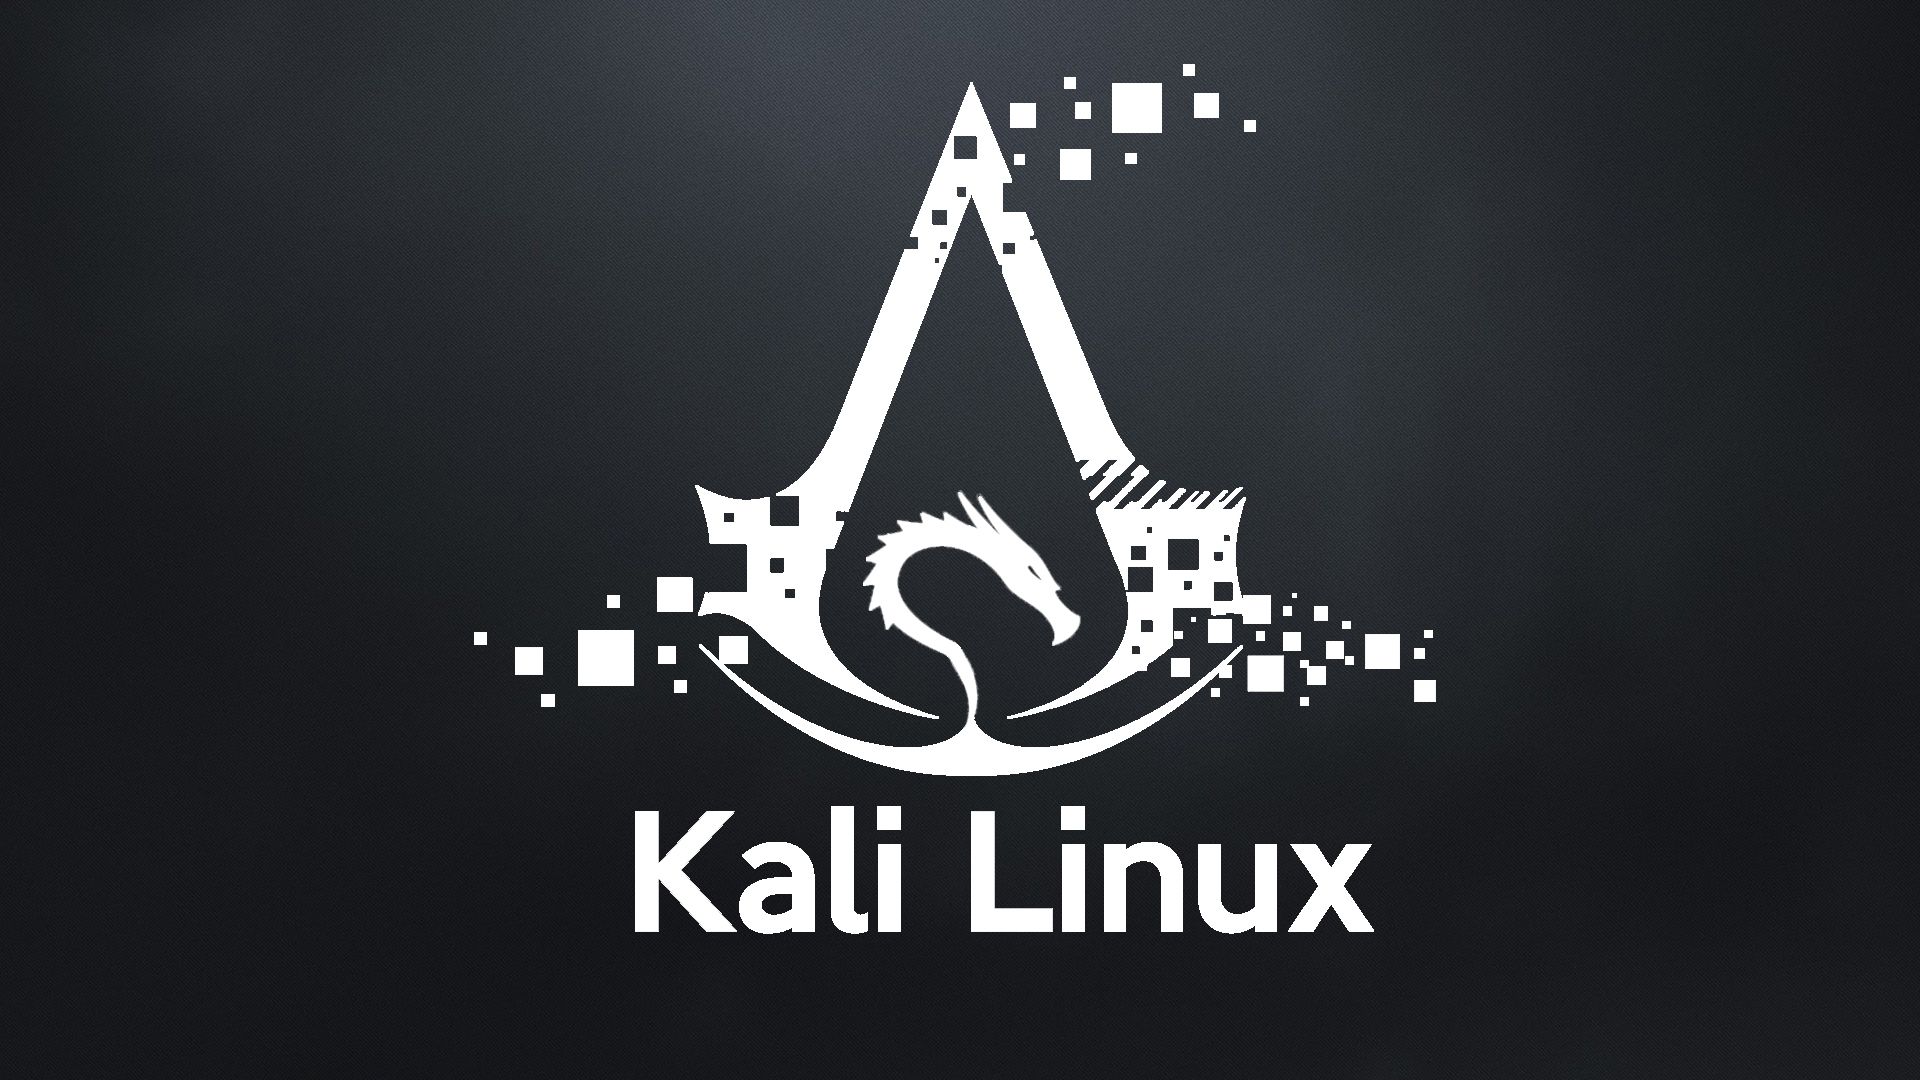 Kali Linux wallpaper by Blur212 on DeviantArt